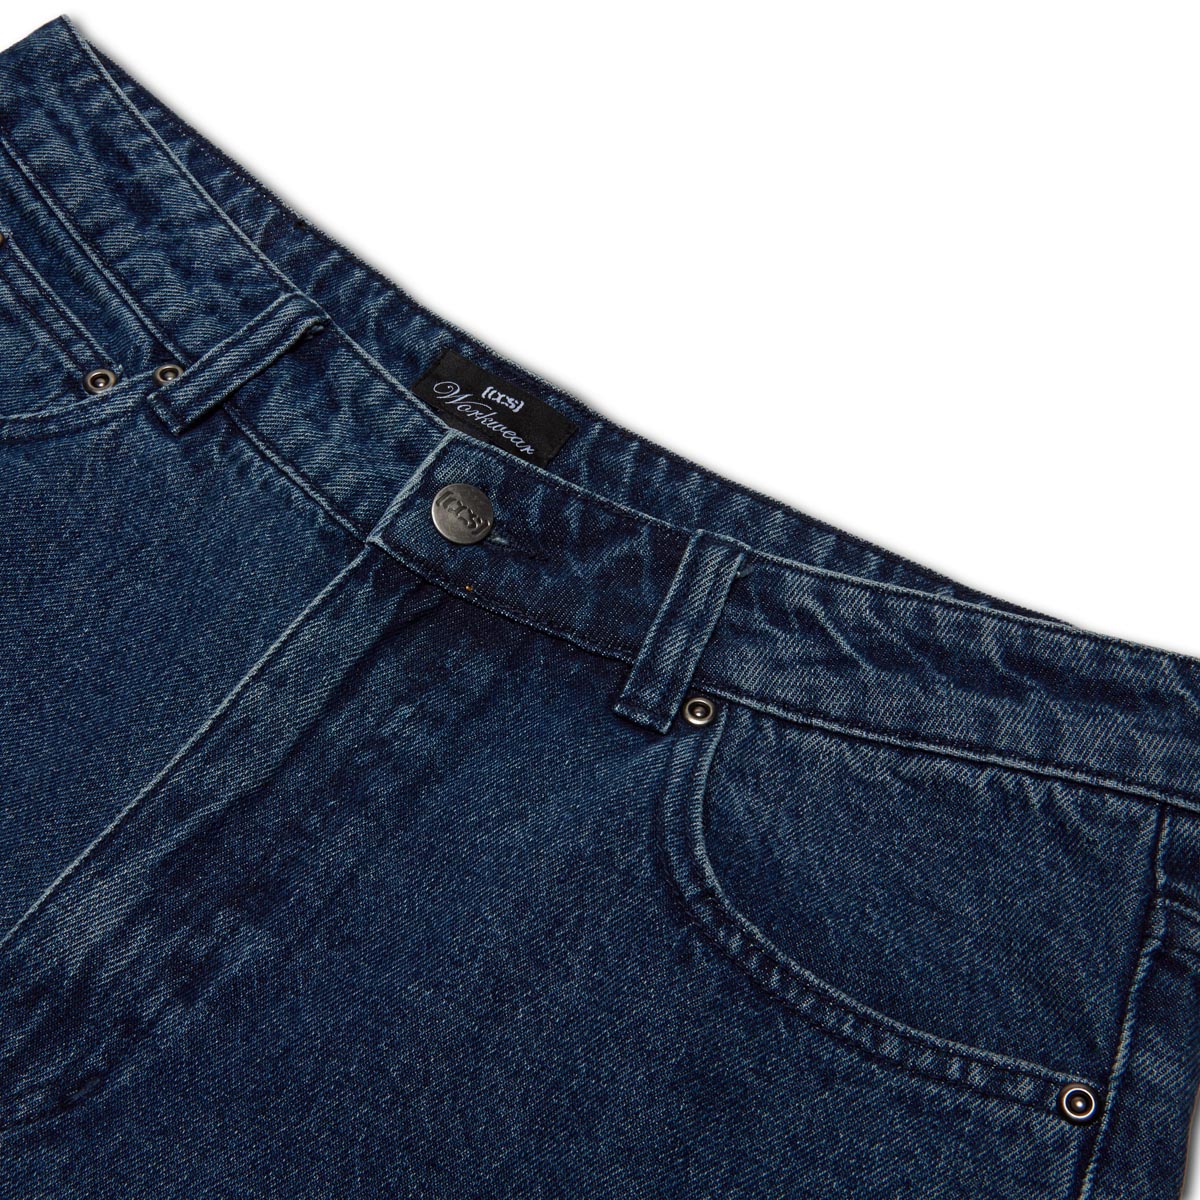 CCS Double Knee Original Relaxed Denim Jeans - True Blue